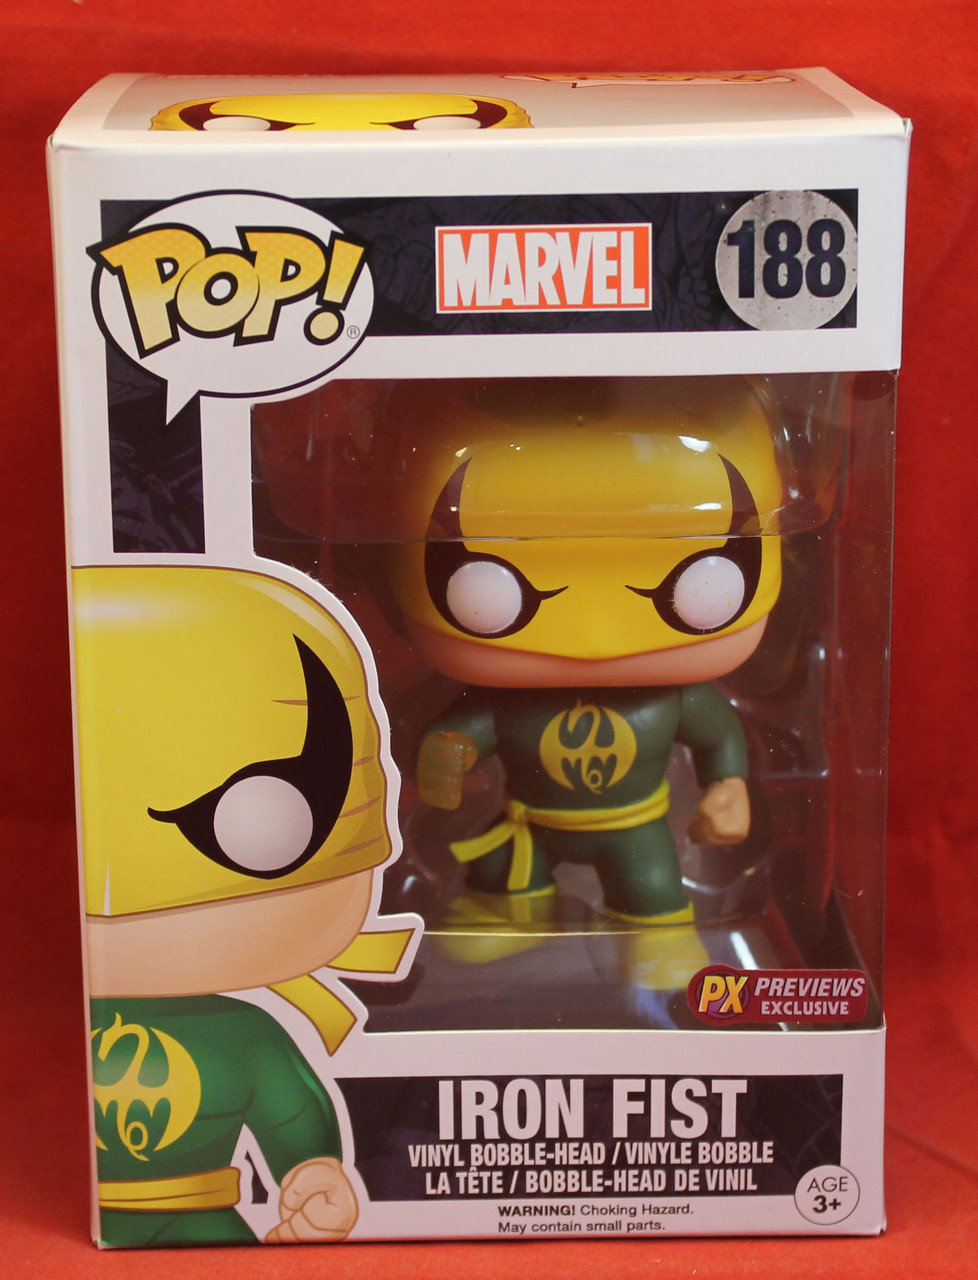 Marvel Pop! Vinyl Figure PX Exclusive #188 Iron Fist